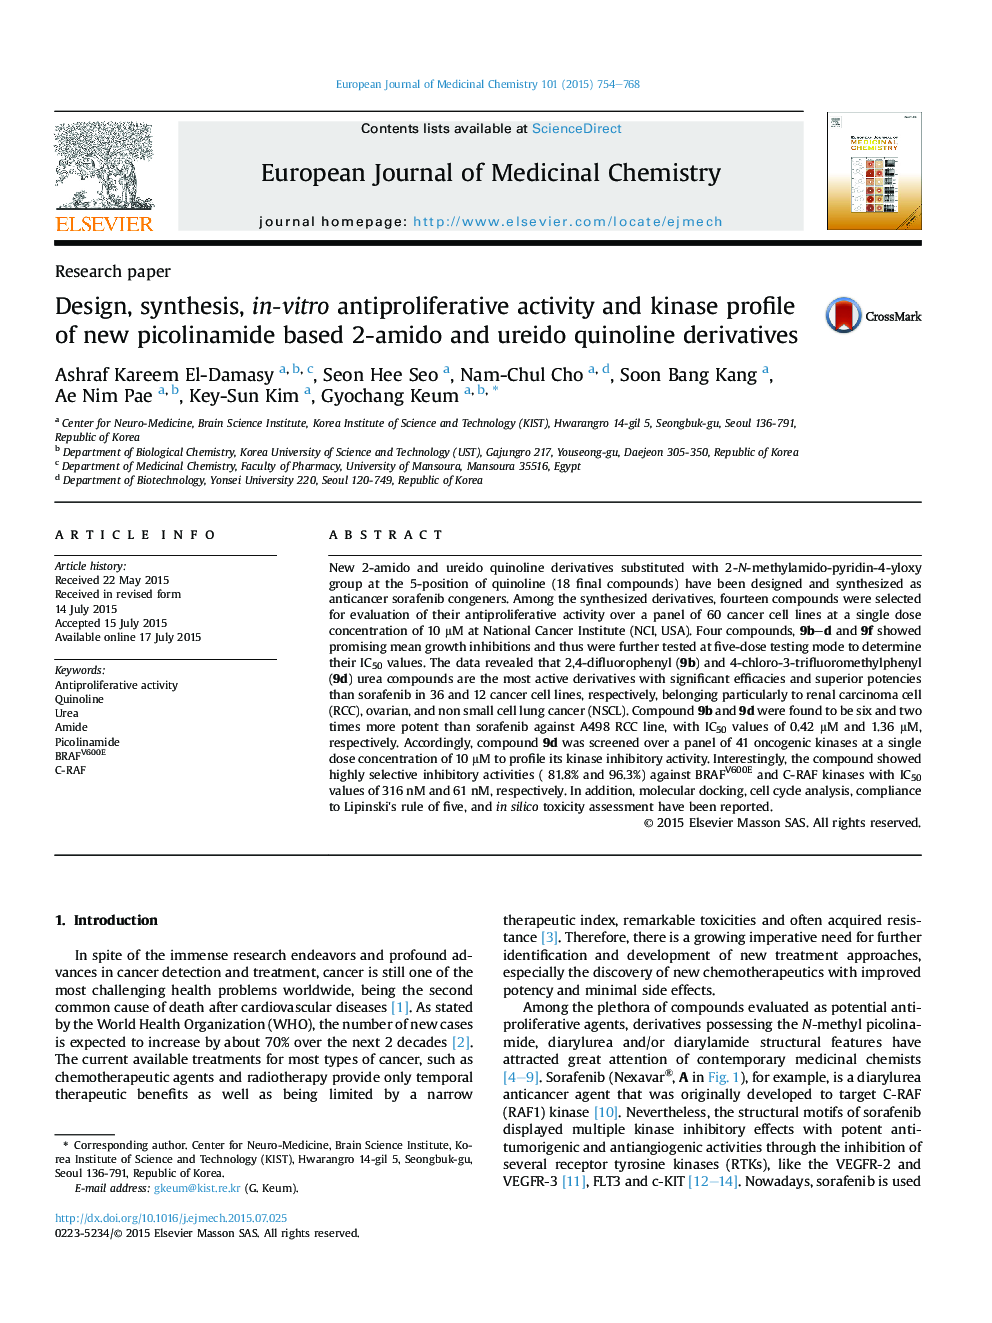 Design, synthesis, in-vitro antiproliferative activity and kinase profile of new picolinamide based 2-amido and ureido quinoline derivatives